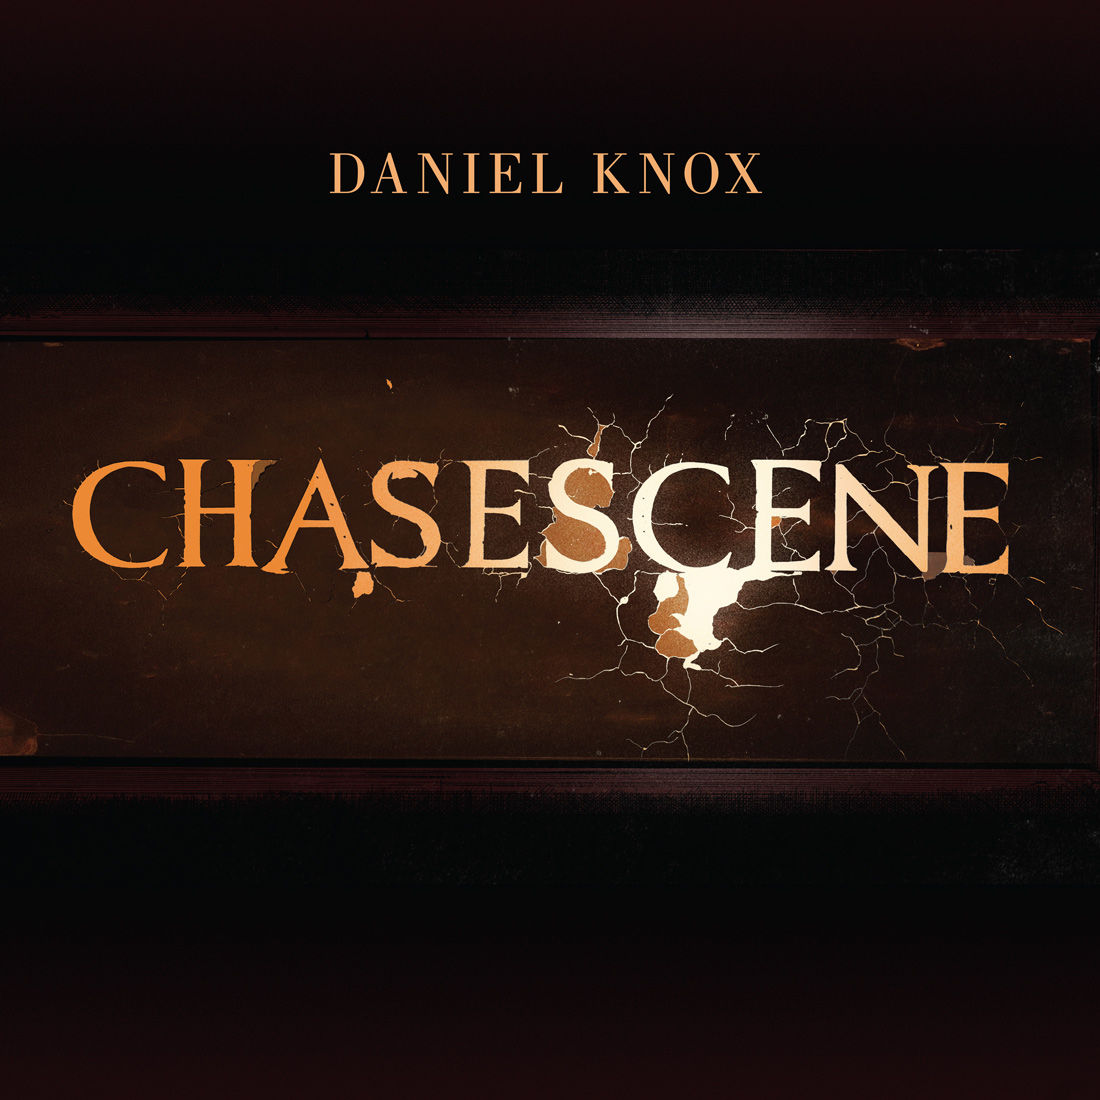 Daniel Knox- Chasescene (H.P Johnson Presents)